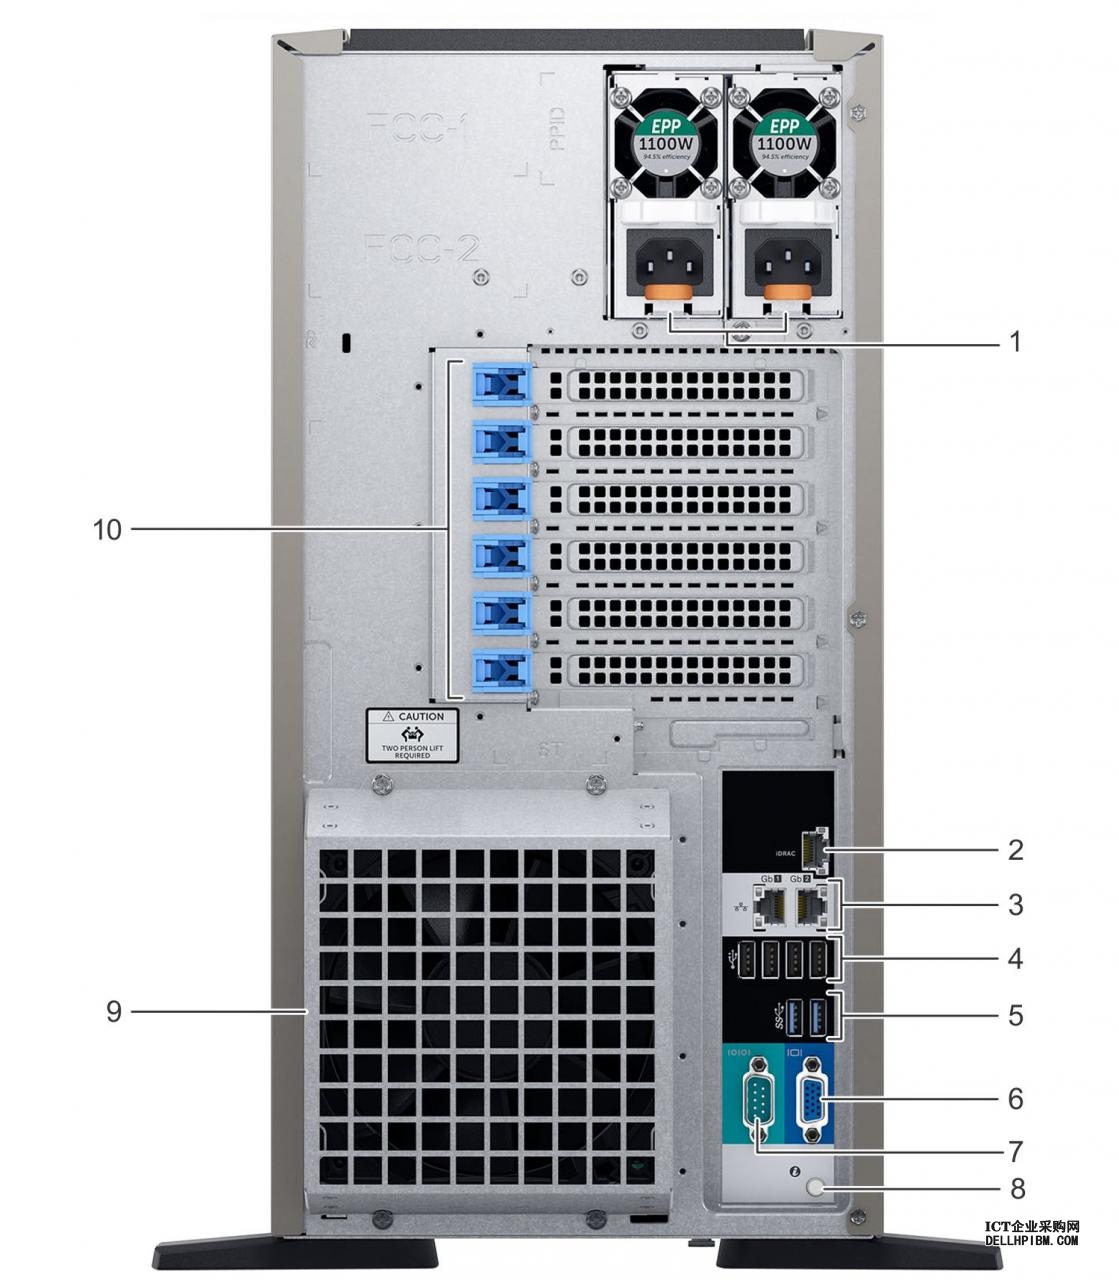 Dell戴尔 PowerEdge T440塔式服务器产品样式，外部形态，内部构造及配套说明